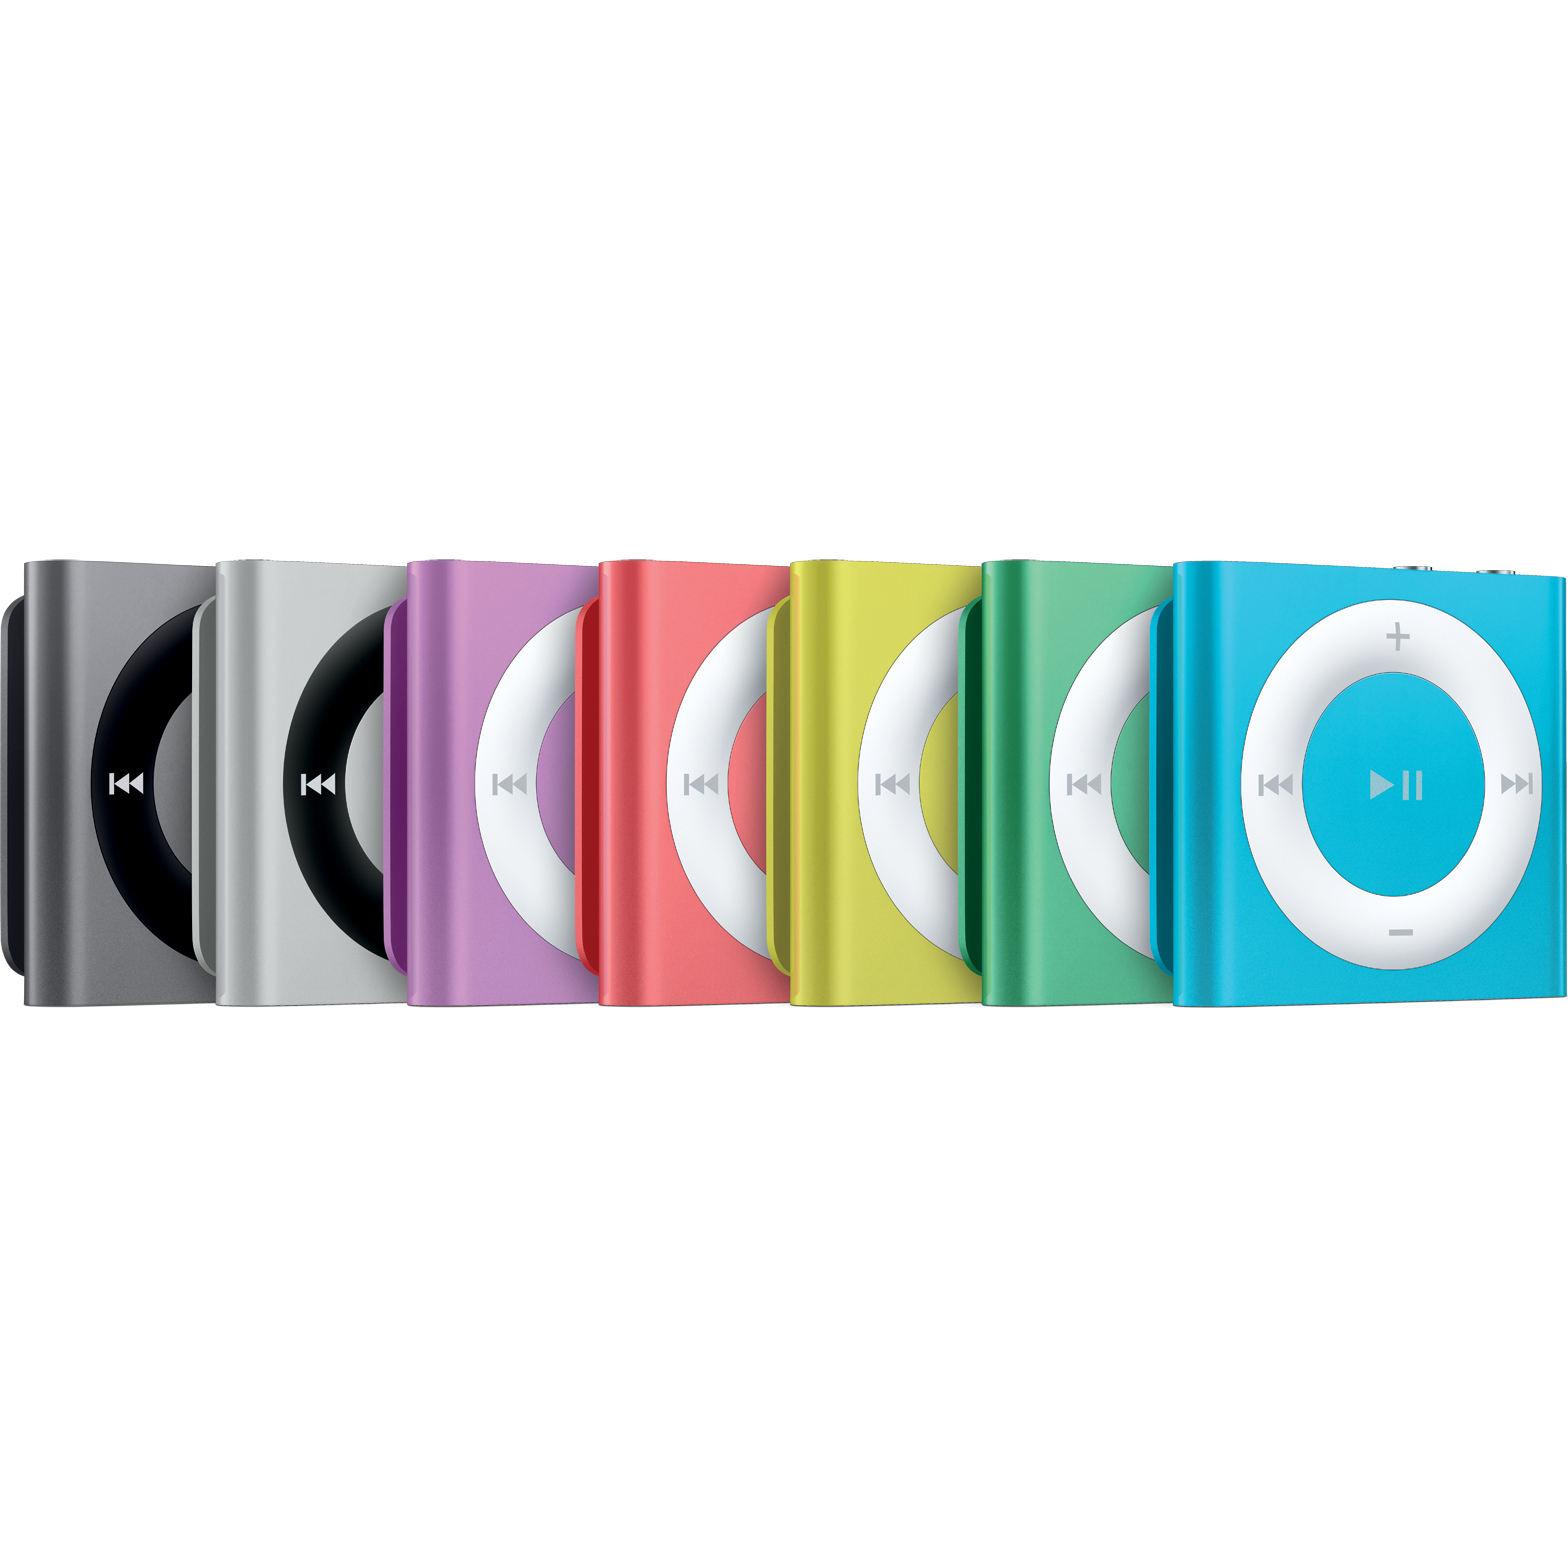 iPod shuffle 4G 2GB Flash MP3 Player - image 3 of 3